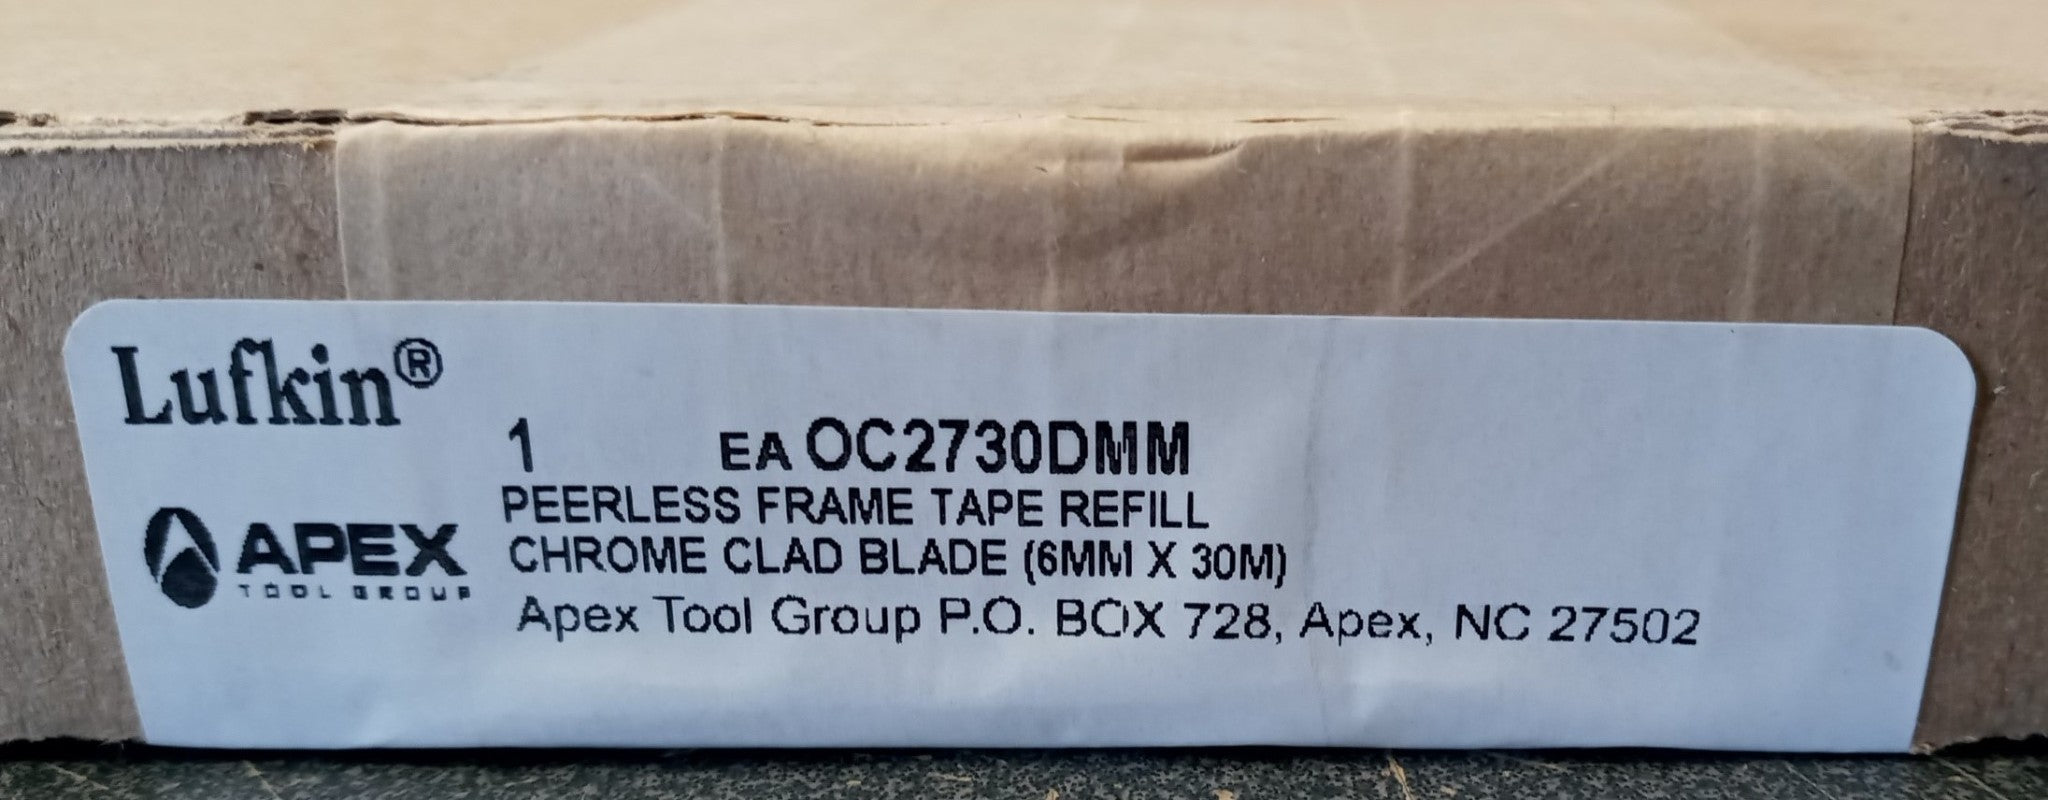 Lufkin OC2730DMM 6mm x 30m Chrome Clad Peerless Frame Tape Refill USA